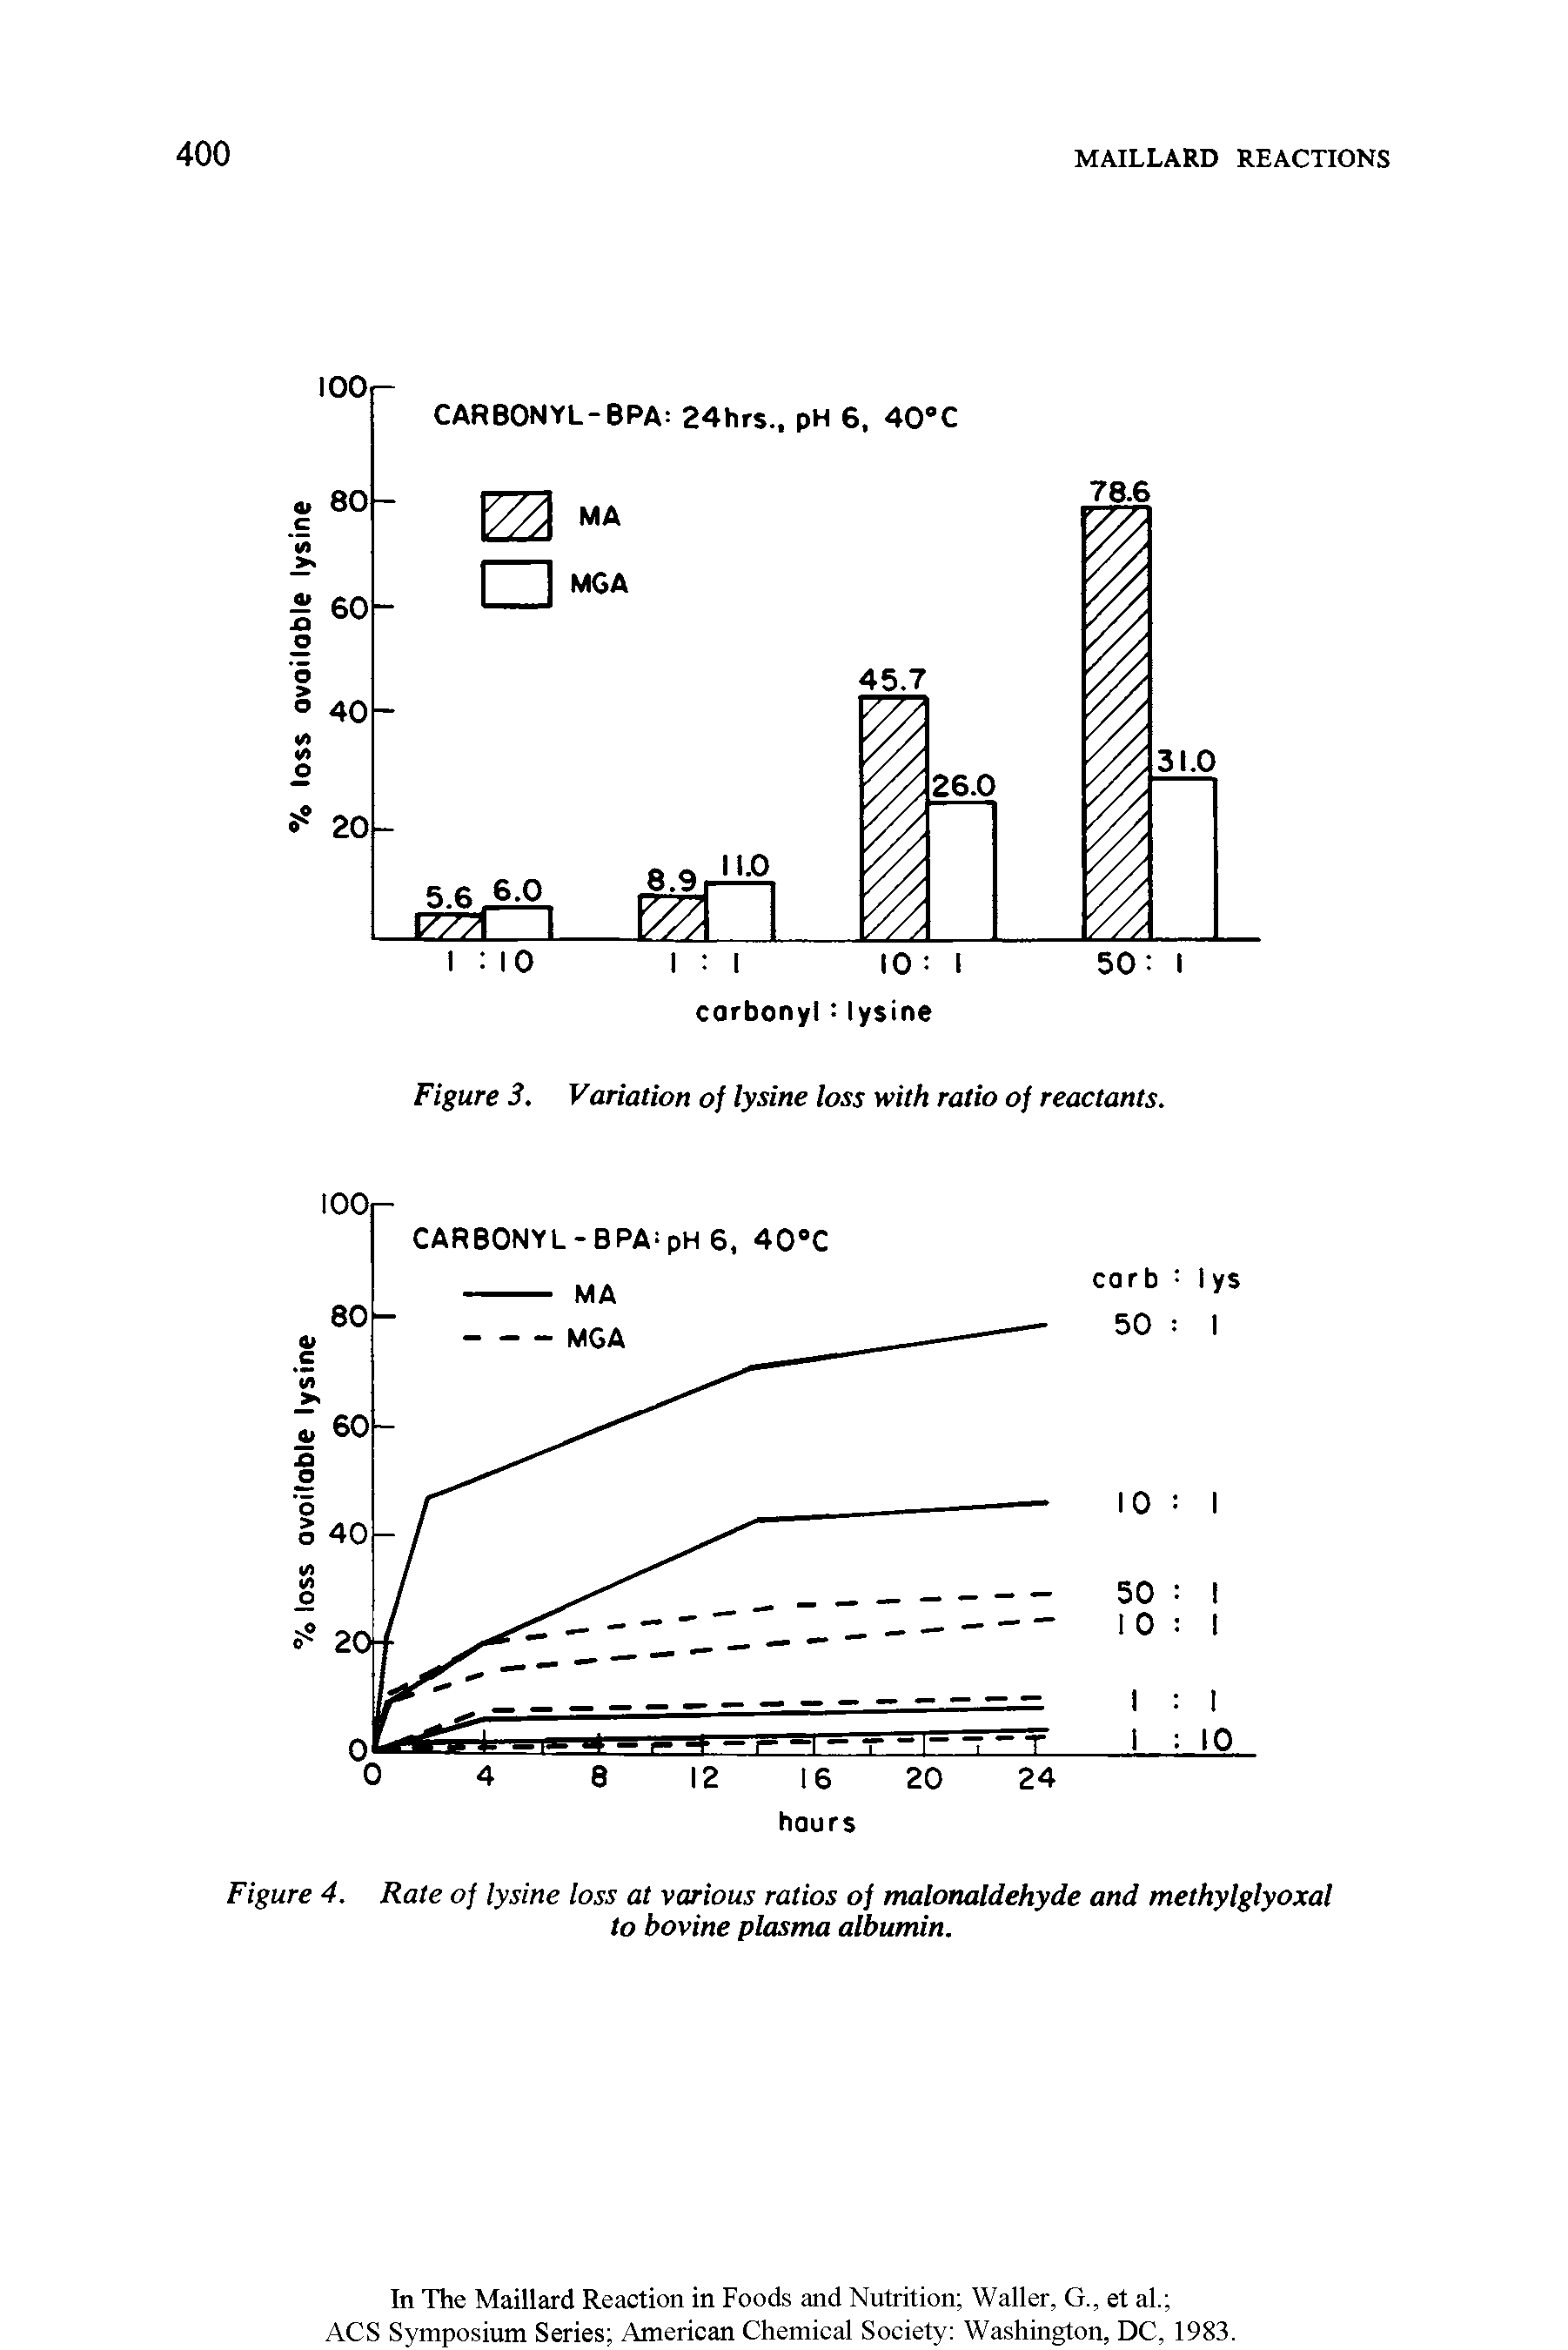 Figure 4. Rate of lysine loss at various ratios of malonaldehyde and methylglyoxal to bovine plasma albumin.